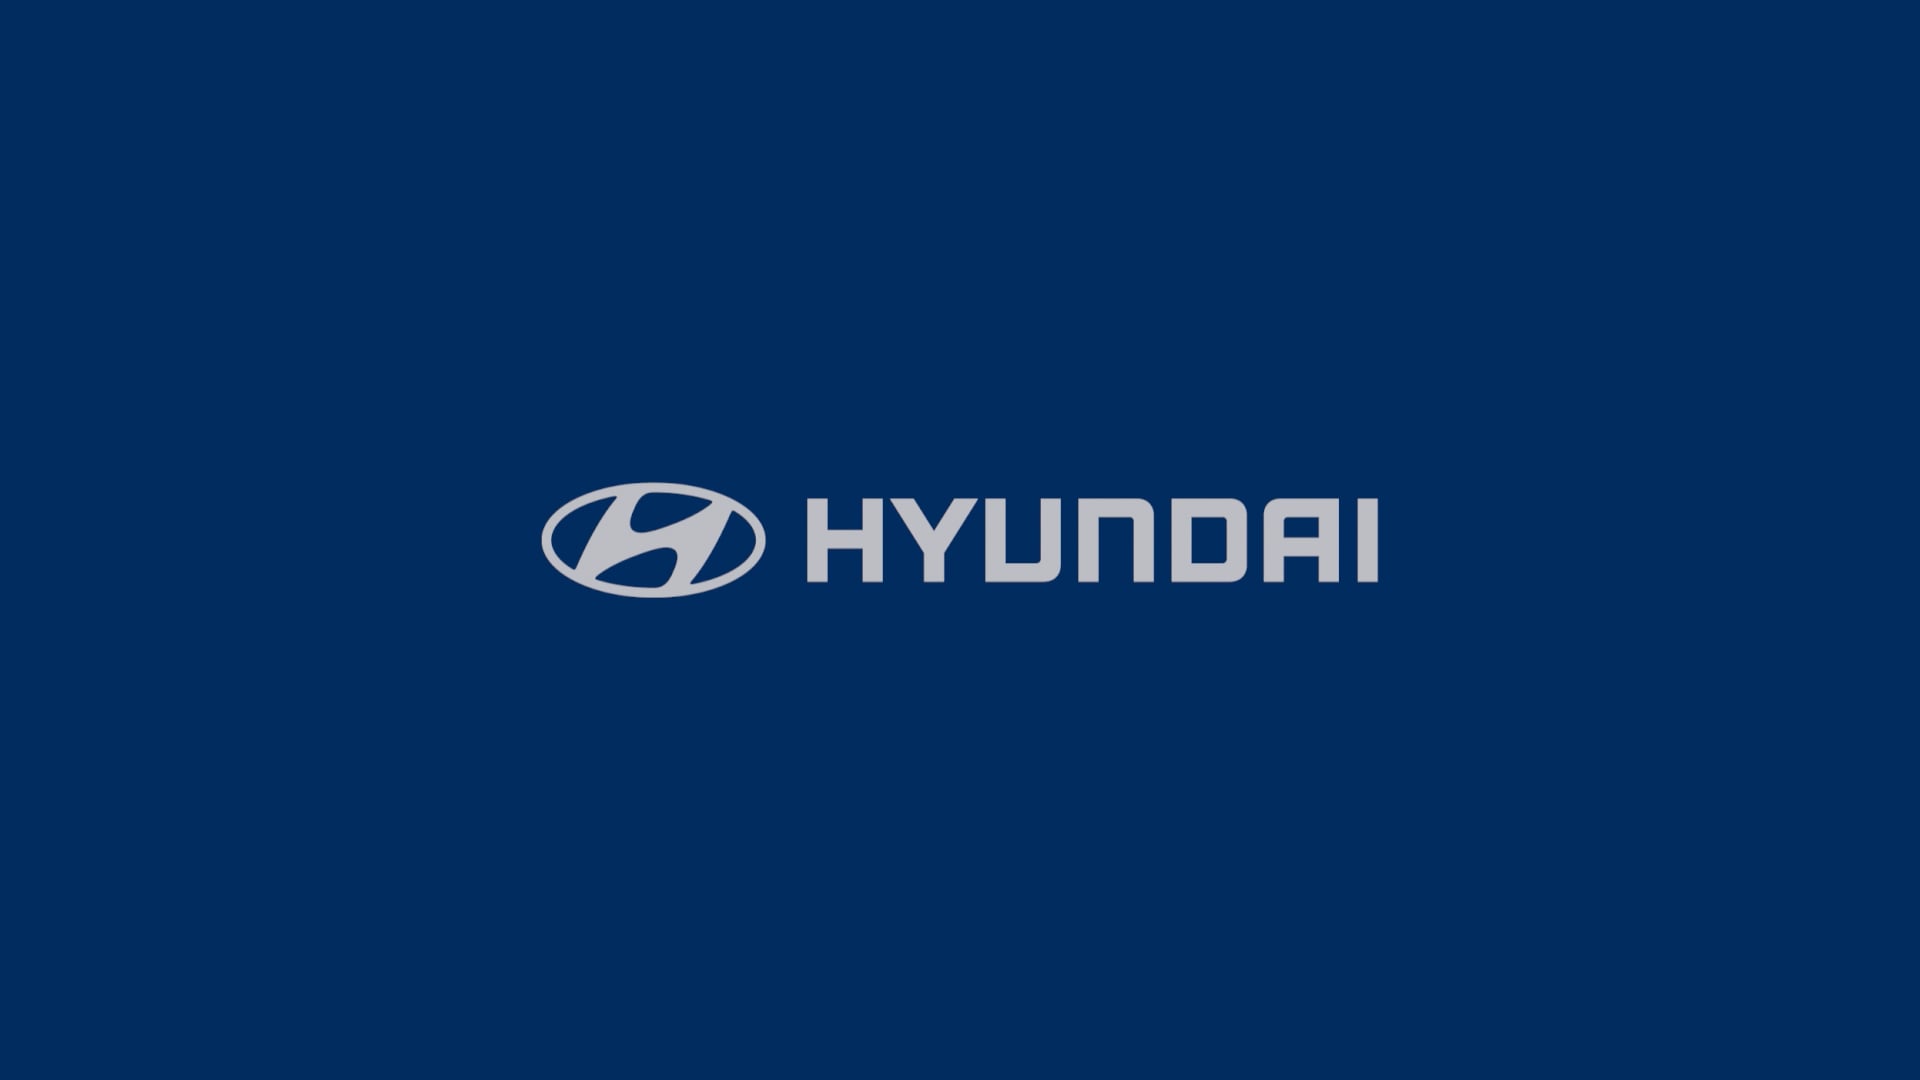 Hyundai Finance_PCH_070622 on Vimeo